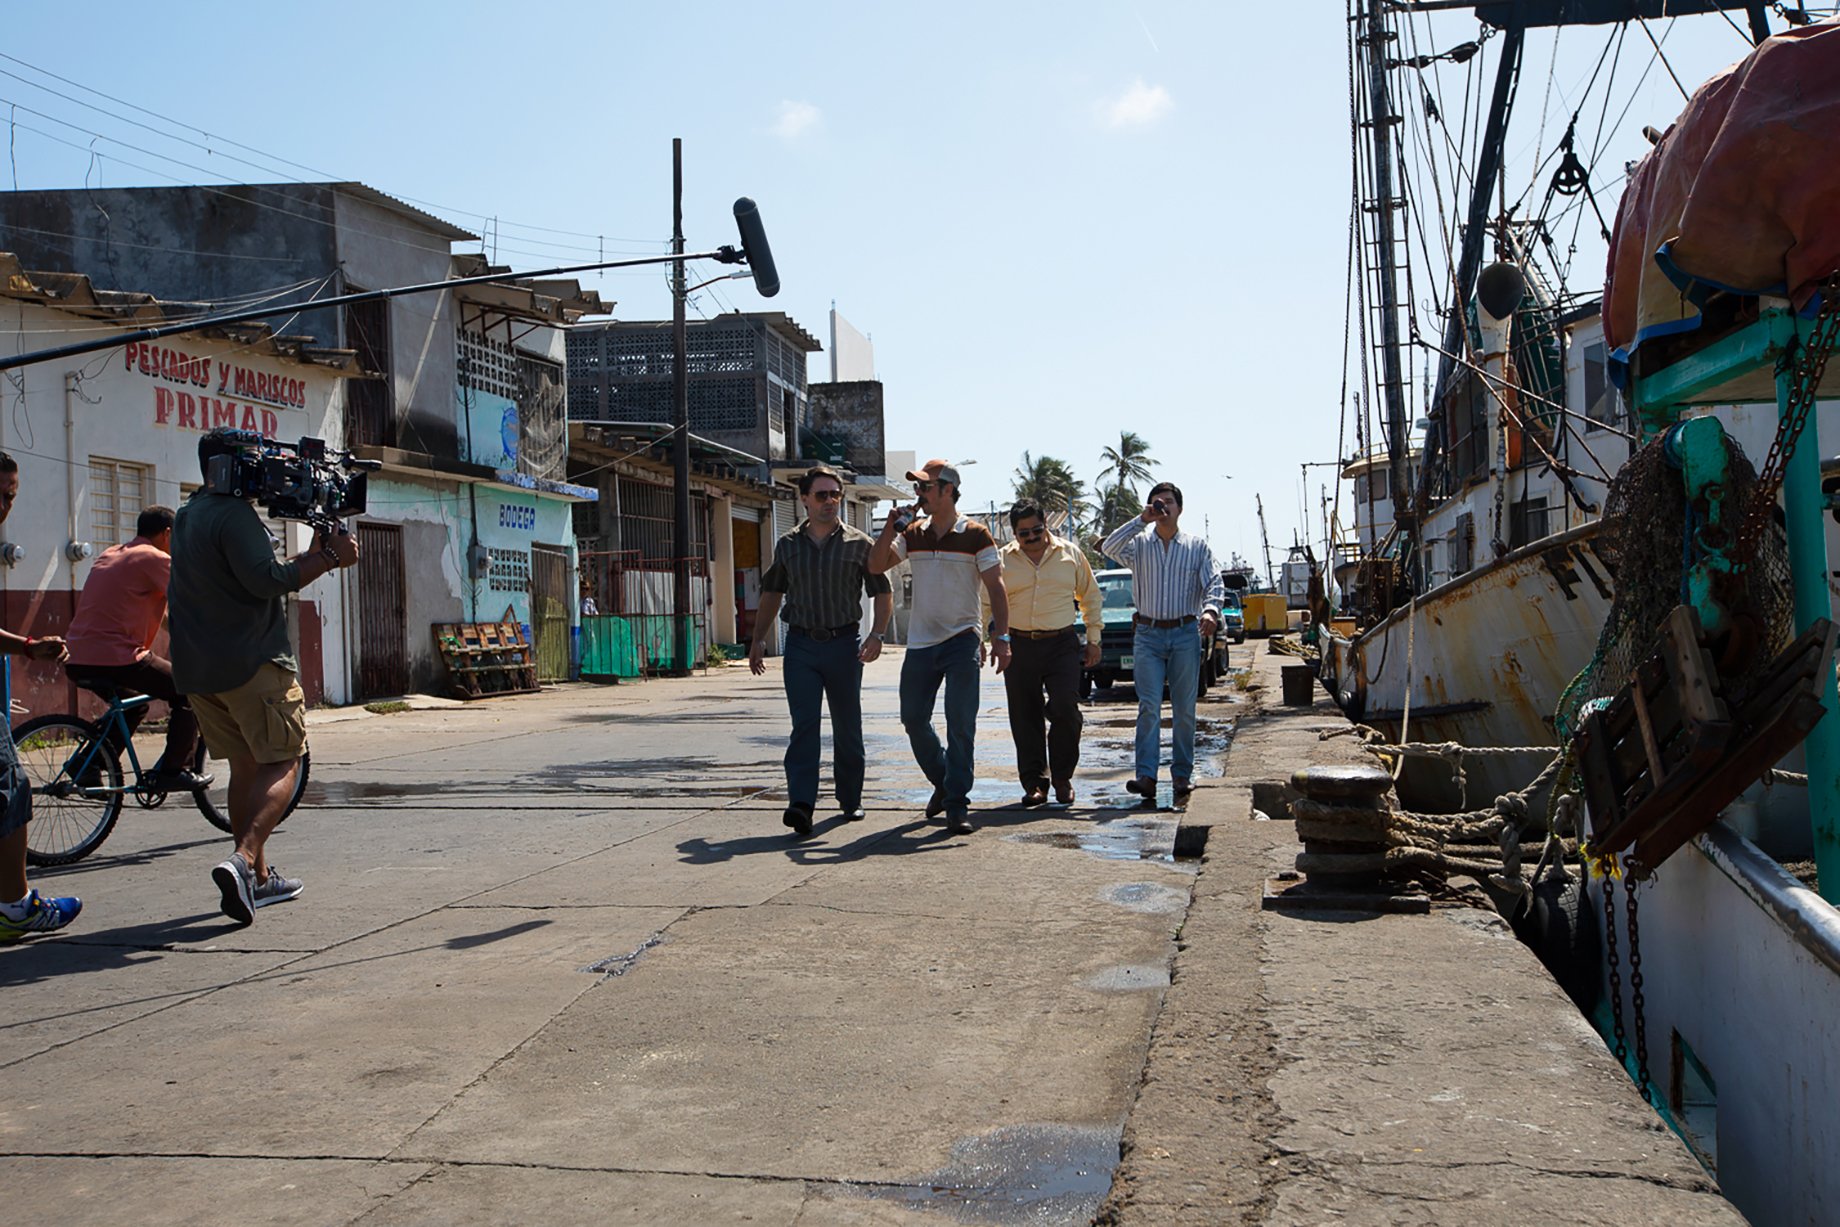 Behind-the-scenes shot of Tijuana cartels walking down pier shot in Veracruz, Mexico for Narcos: Mexico Season 3 shot by Nicole Franco for Netflix